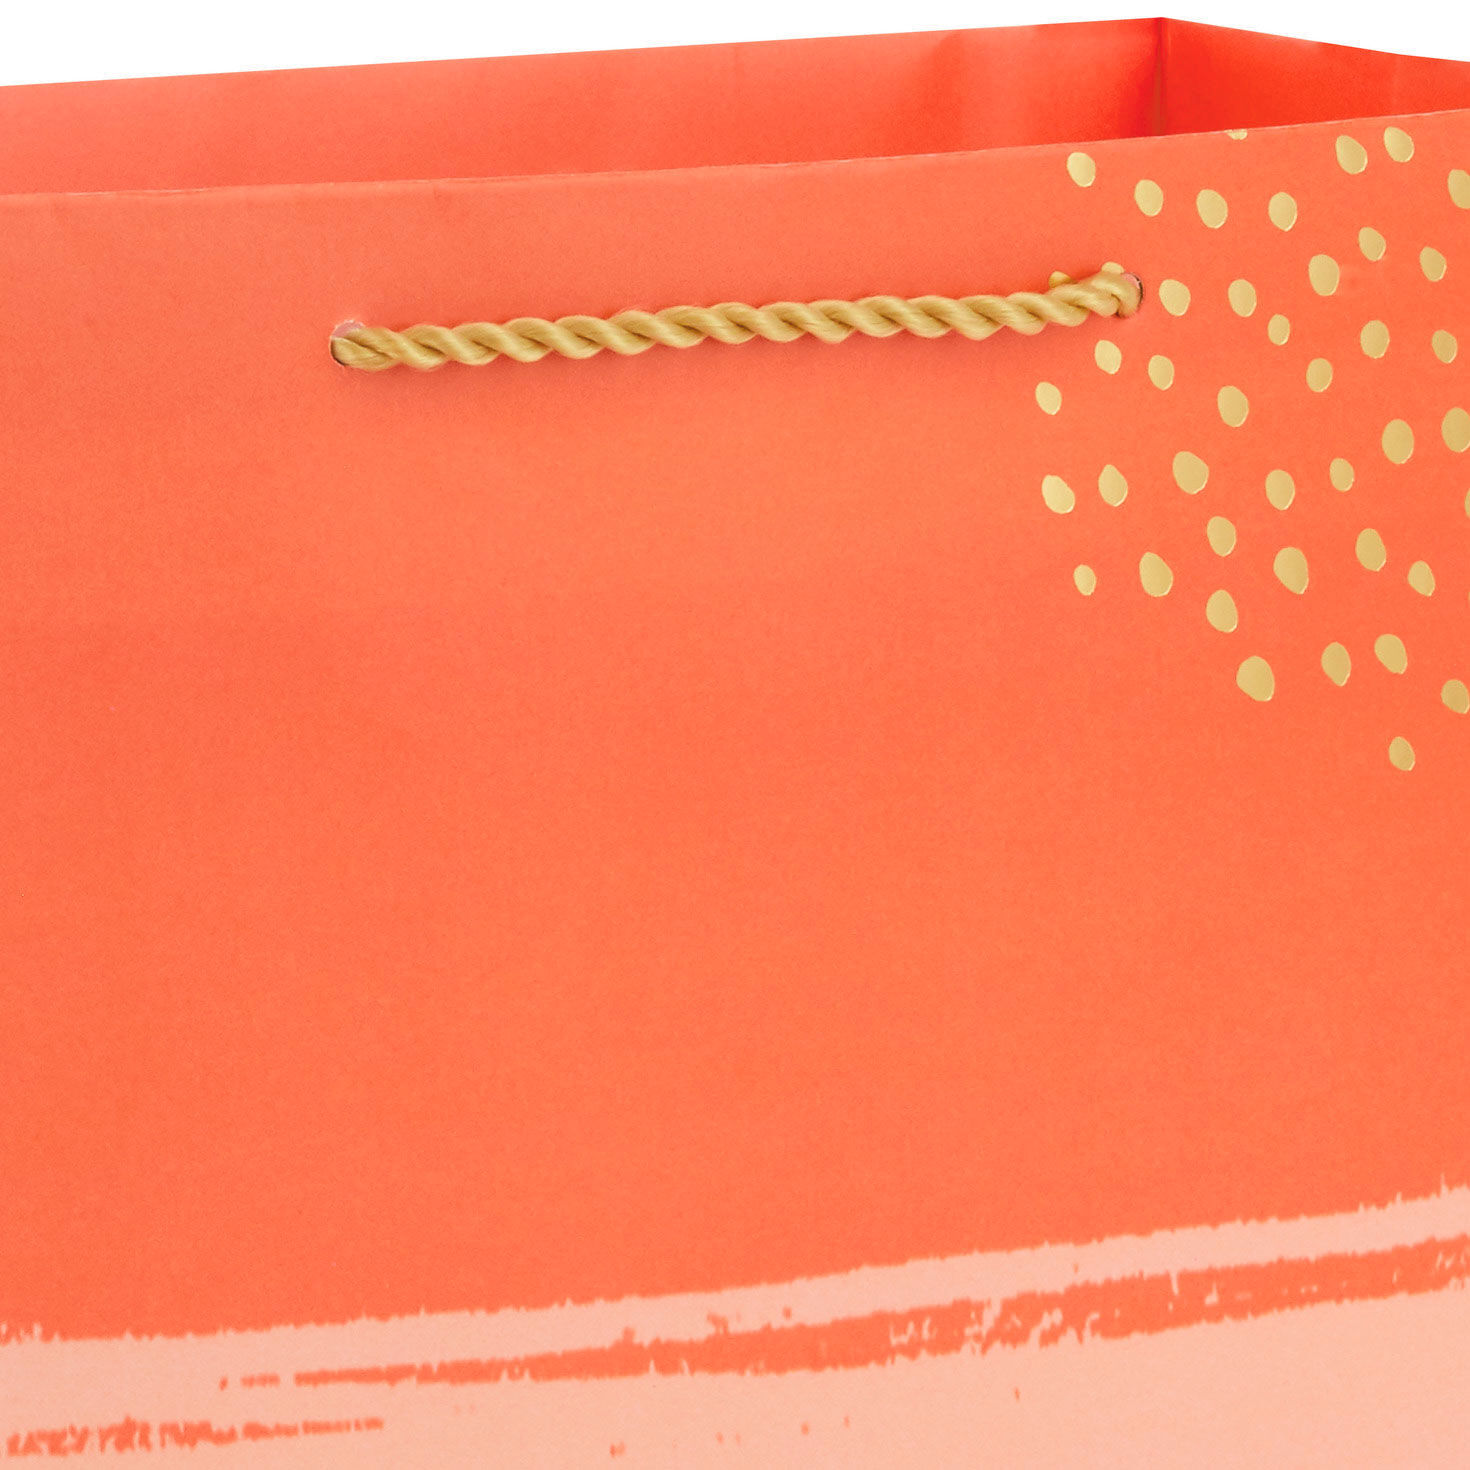 7.7" Orange and Coral Medium Horizontal Gift Bag for only USD 2.99 | Hallmark